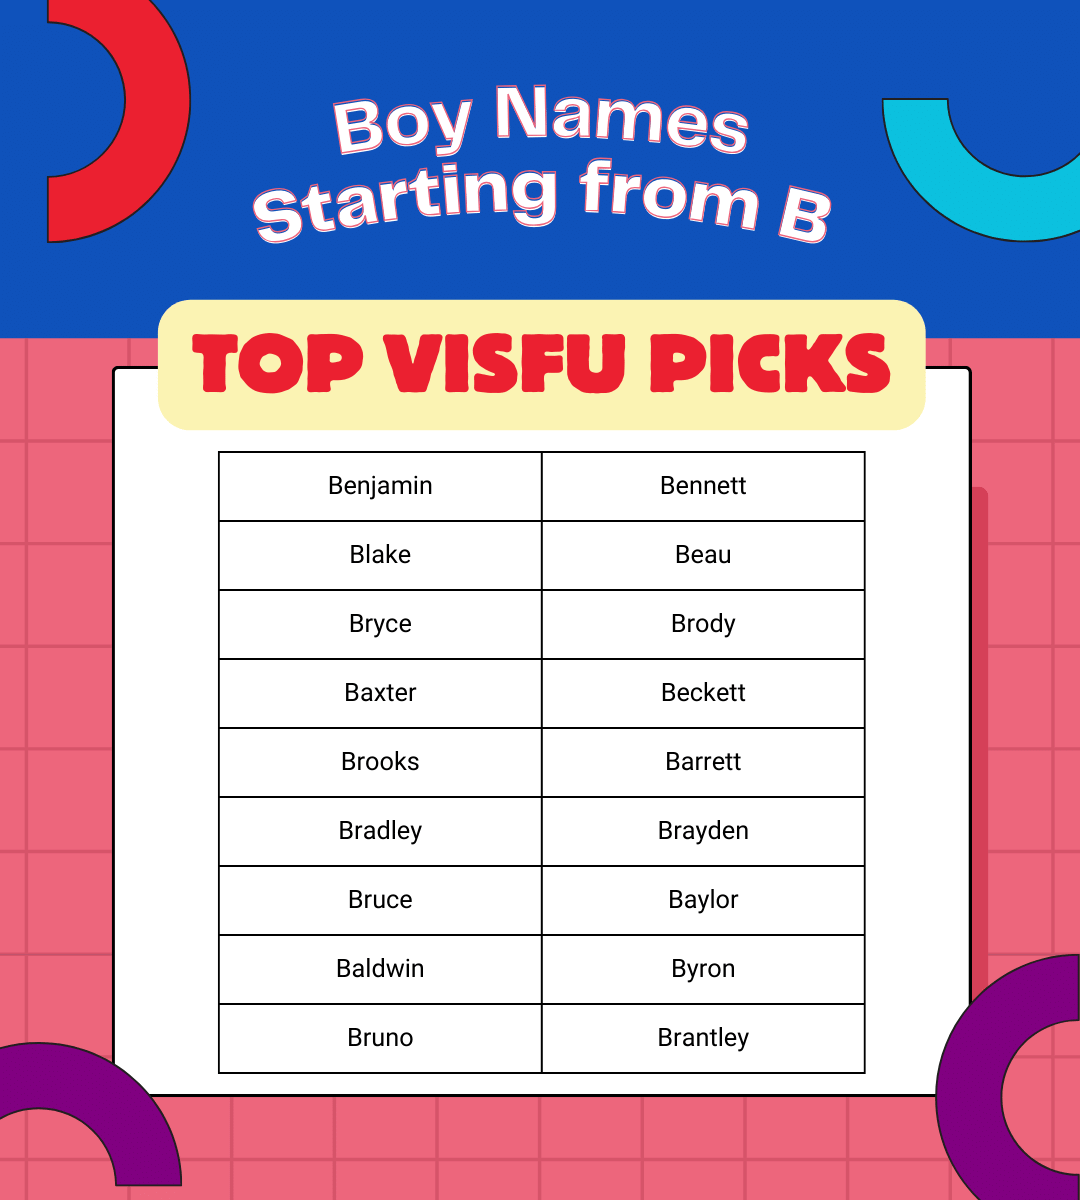 Boy names starting from B